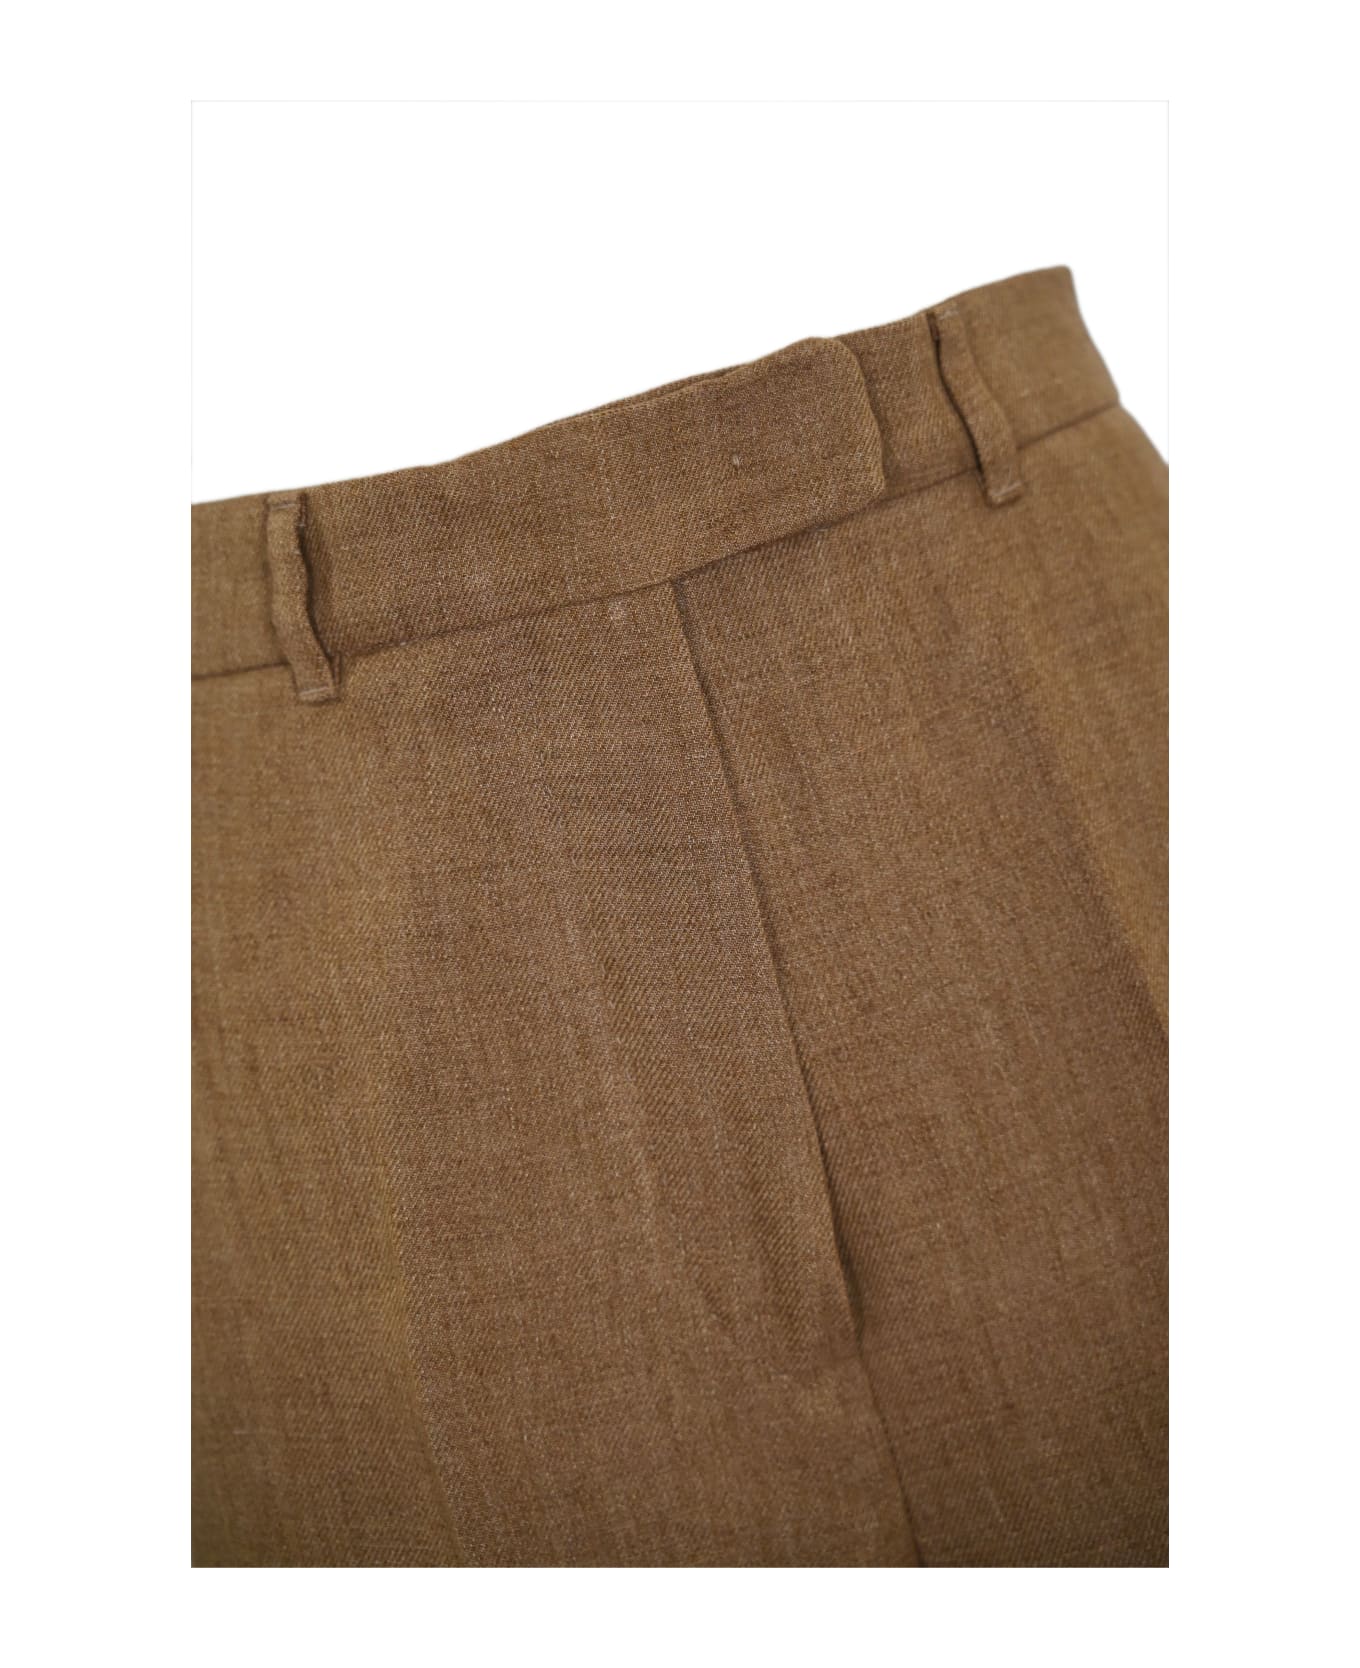 Max Mara Studio 'alcano' Linen Trousers - SIGARO